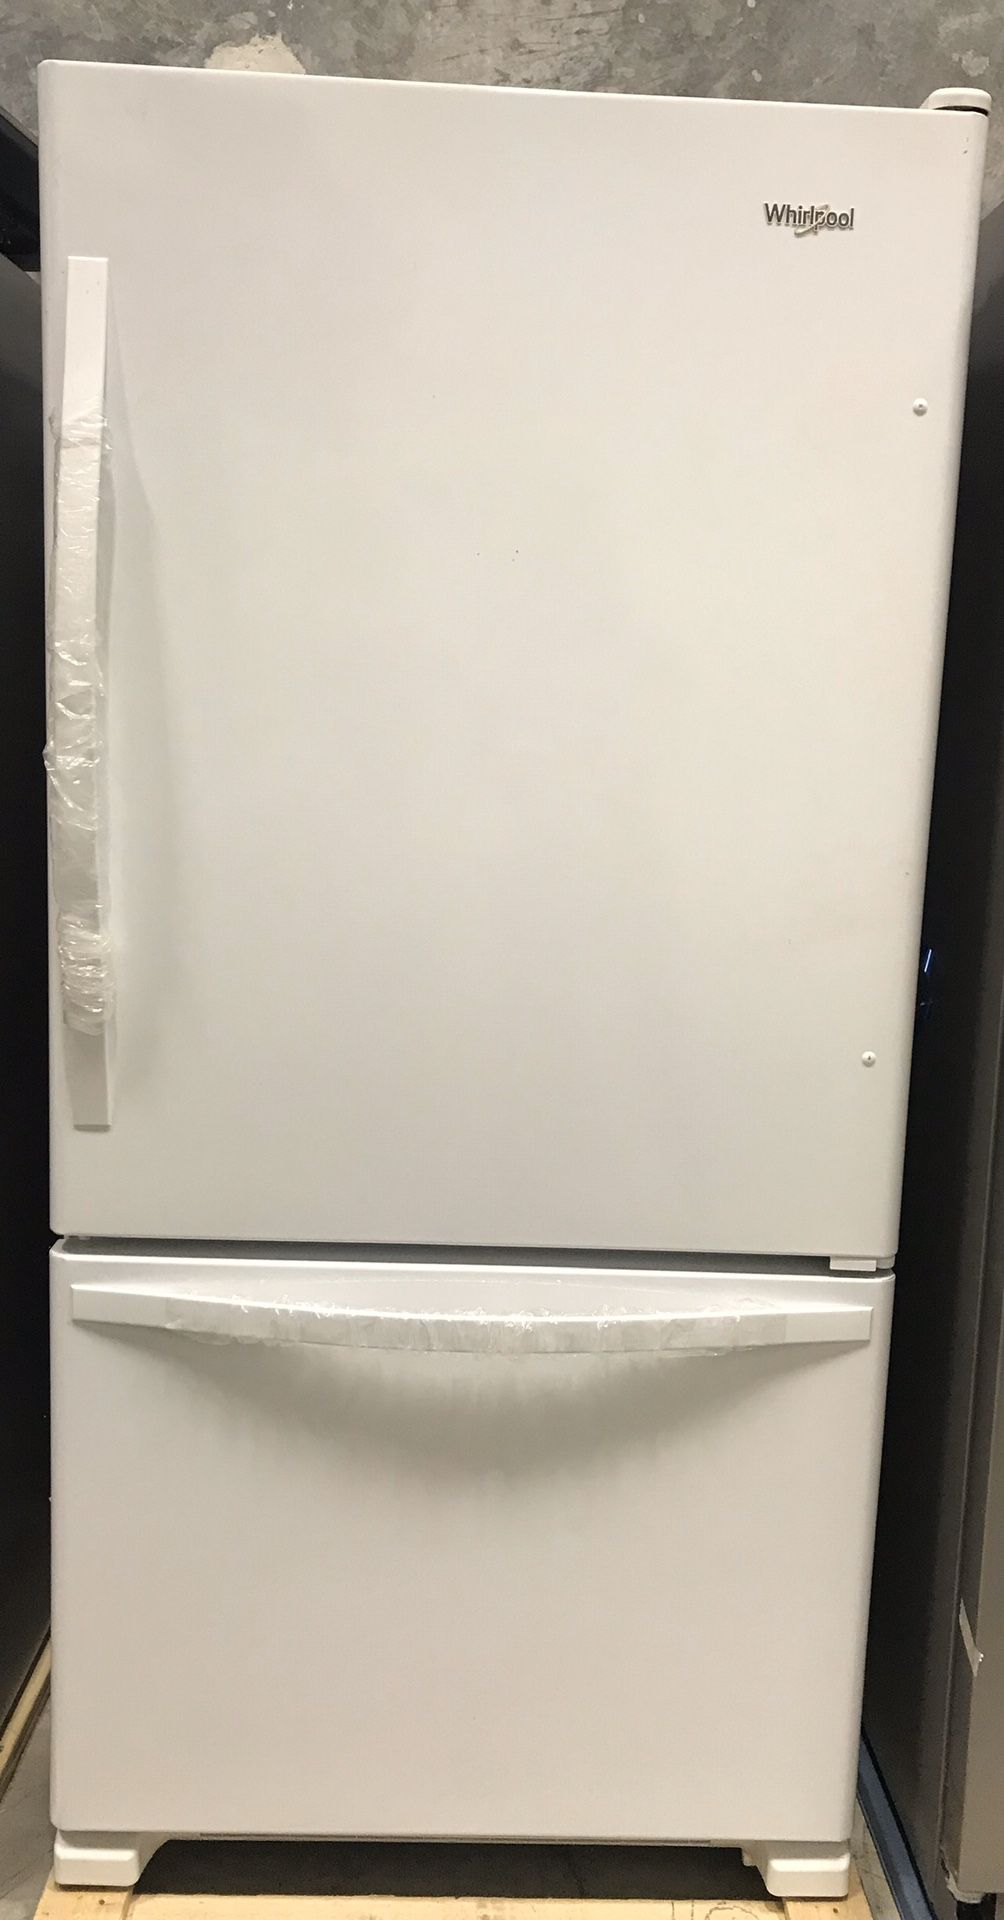 Refrigerator Wirpool white bottom freezer refrigerator